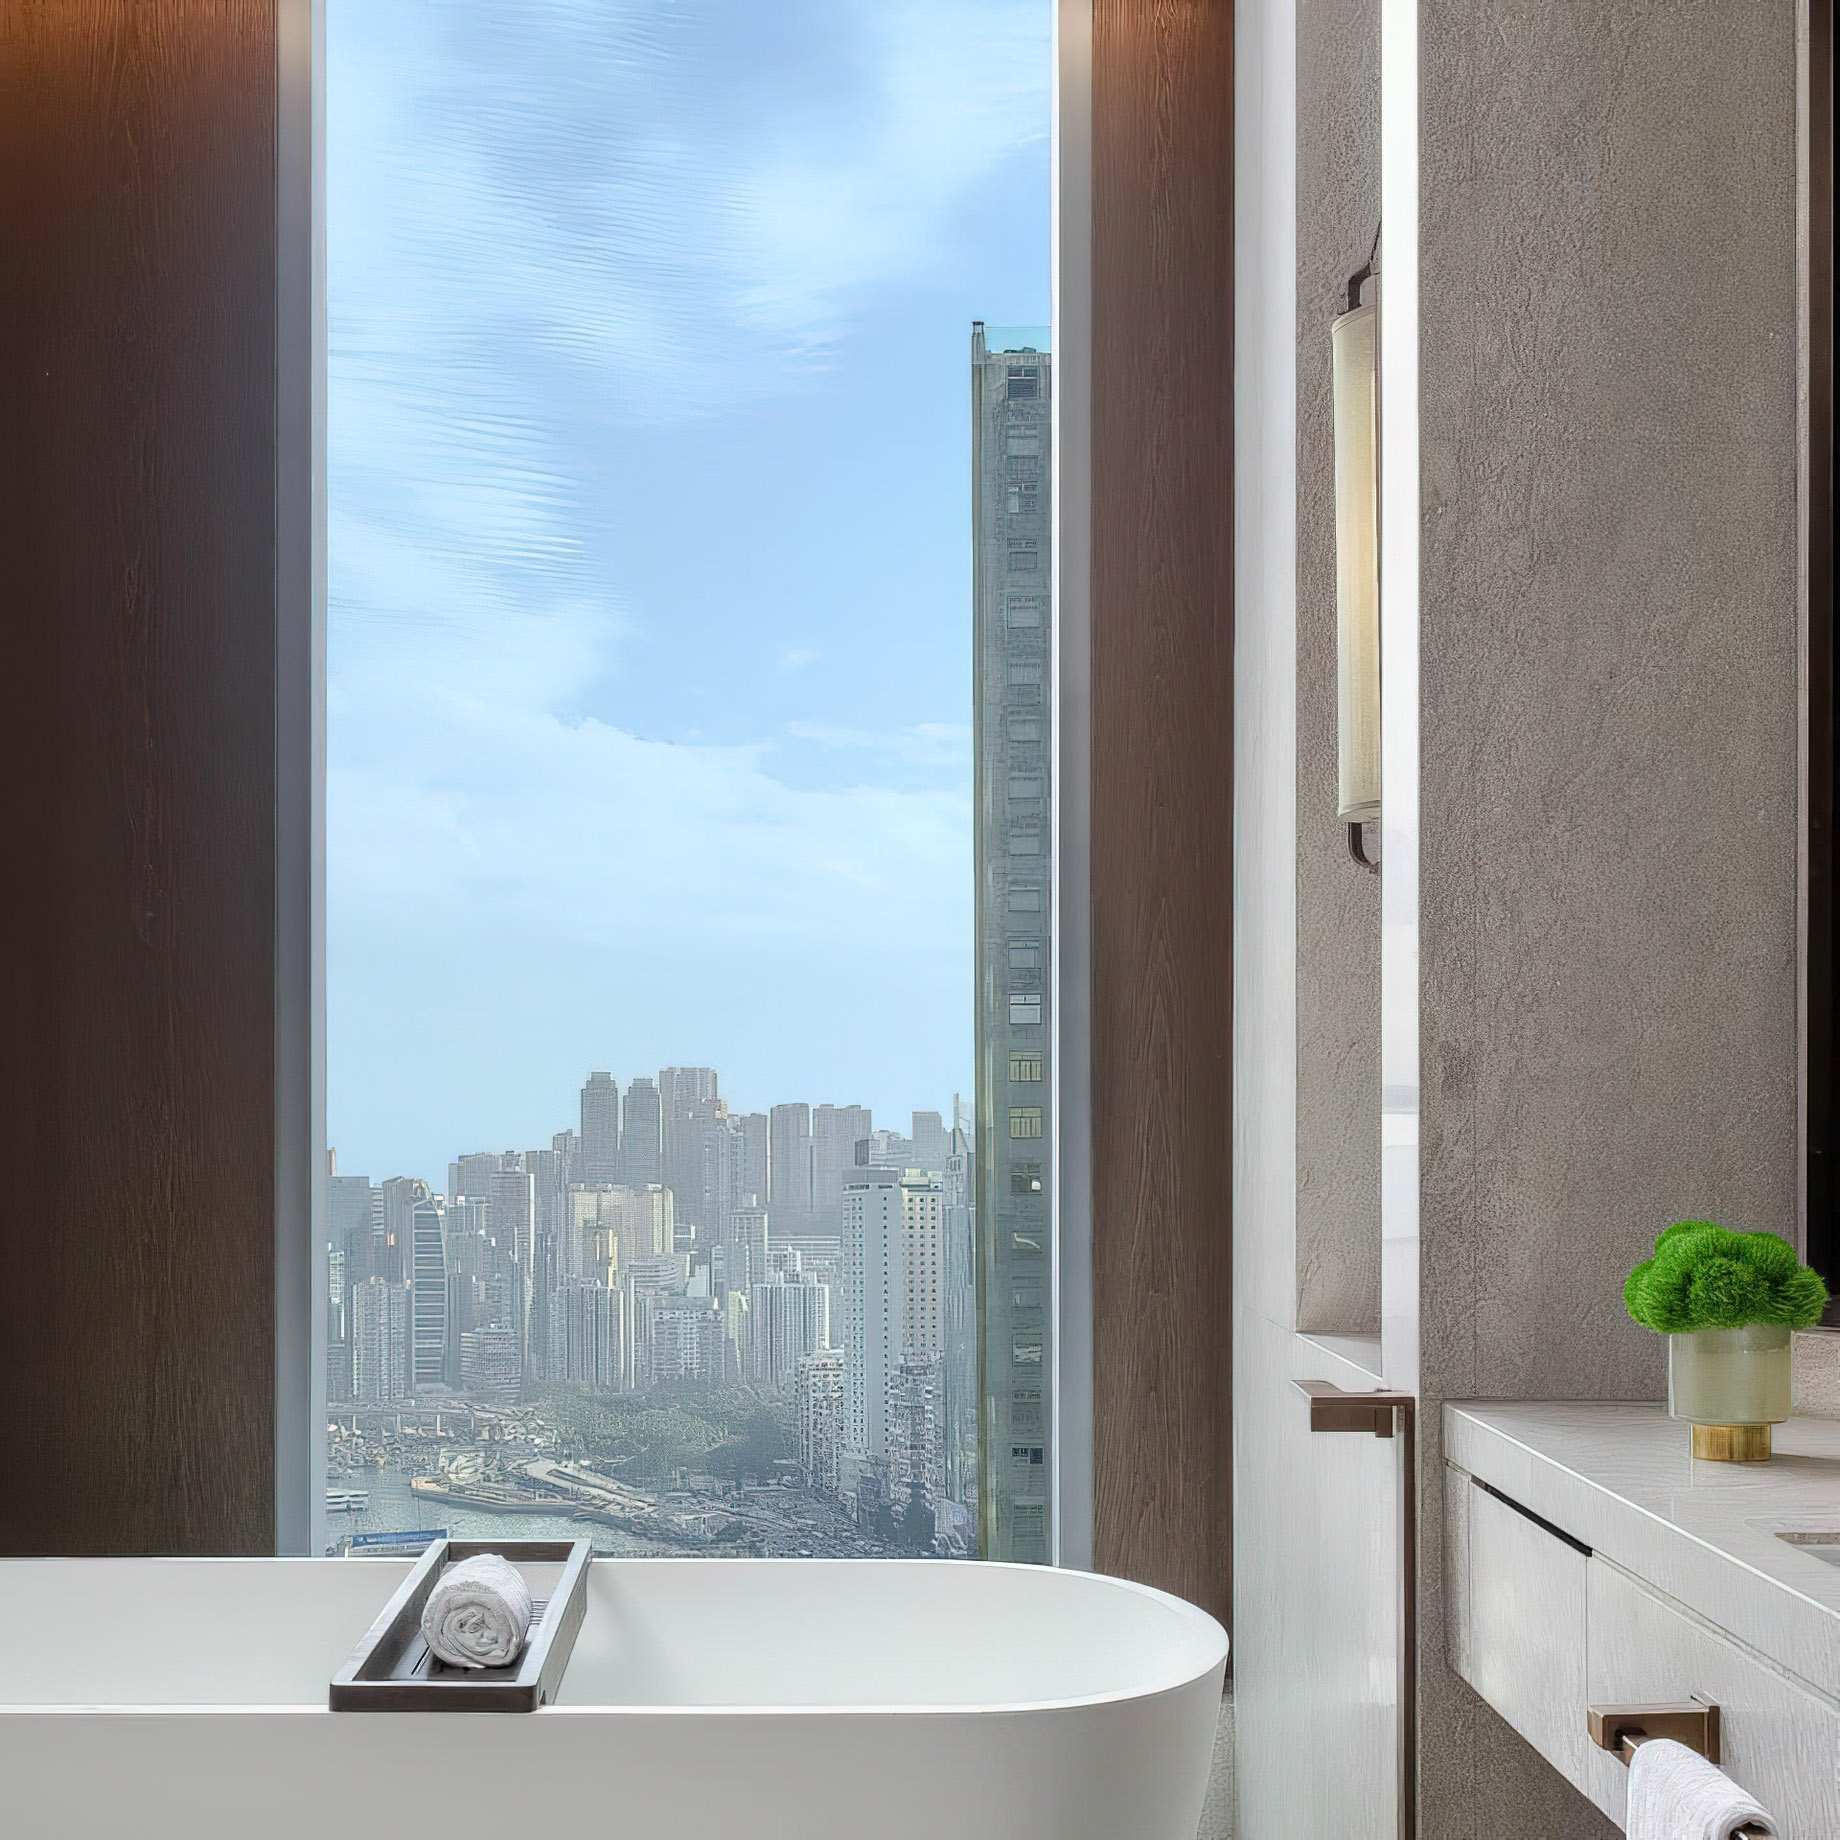 The St. Regis Hong Kong Hotel - Wan Chai, Hong Kong - Bathroom View